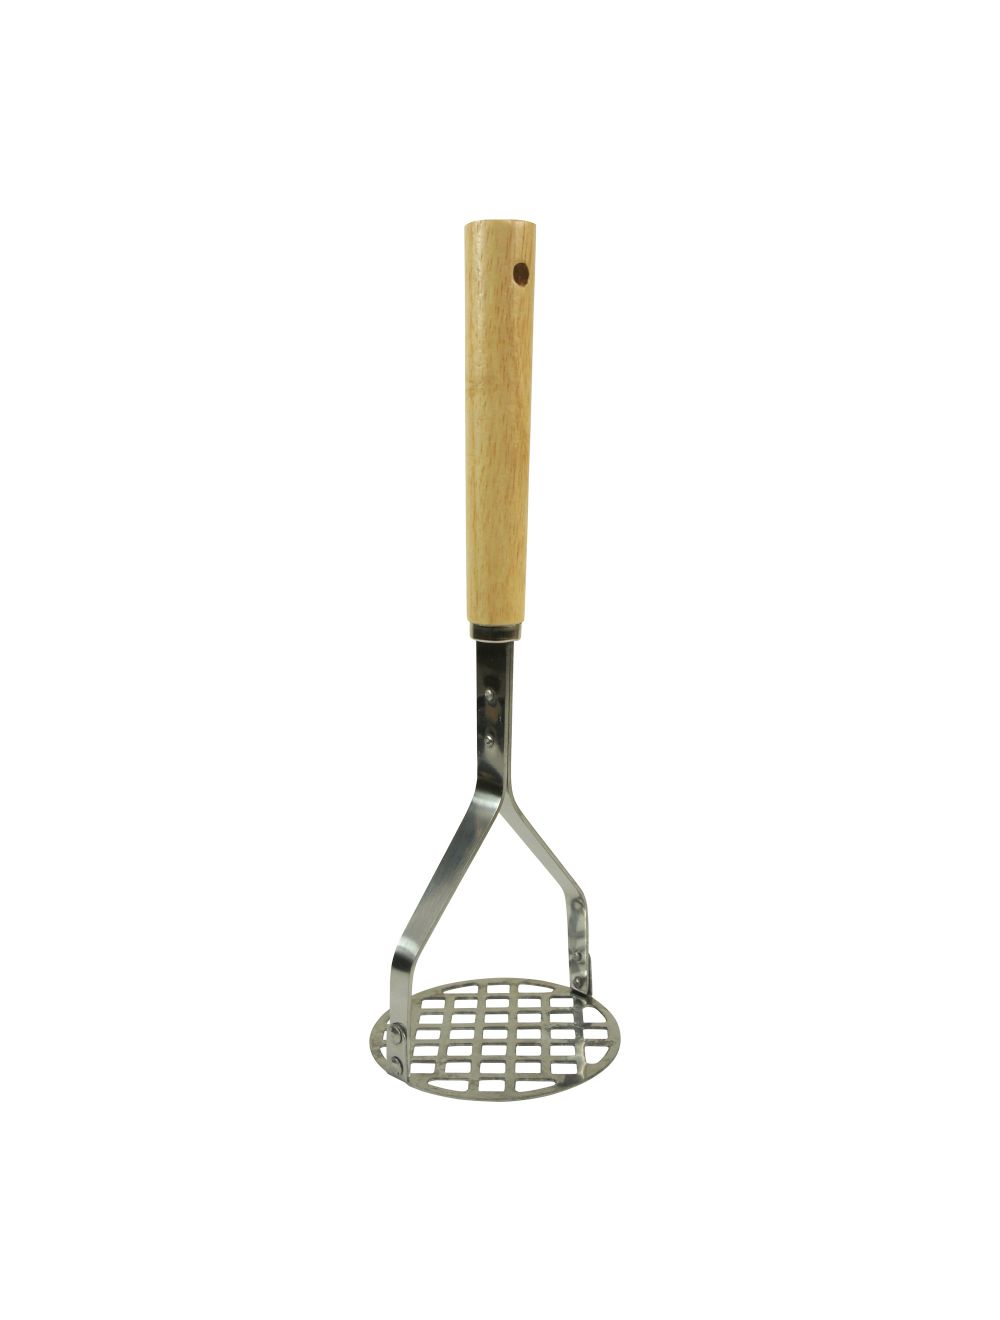 Potato masher, S/S w/ Wood handle